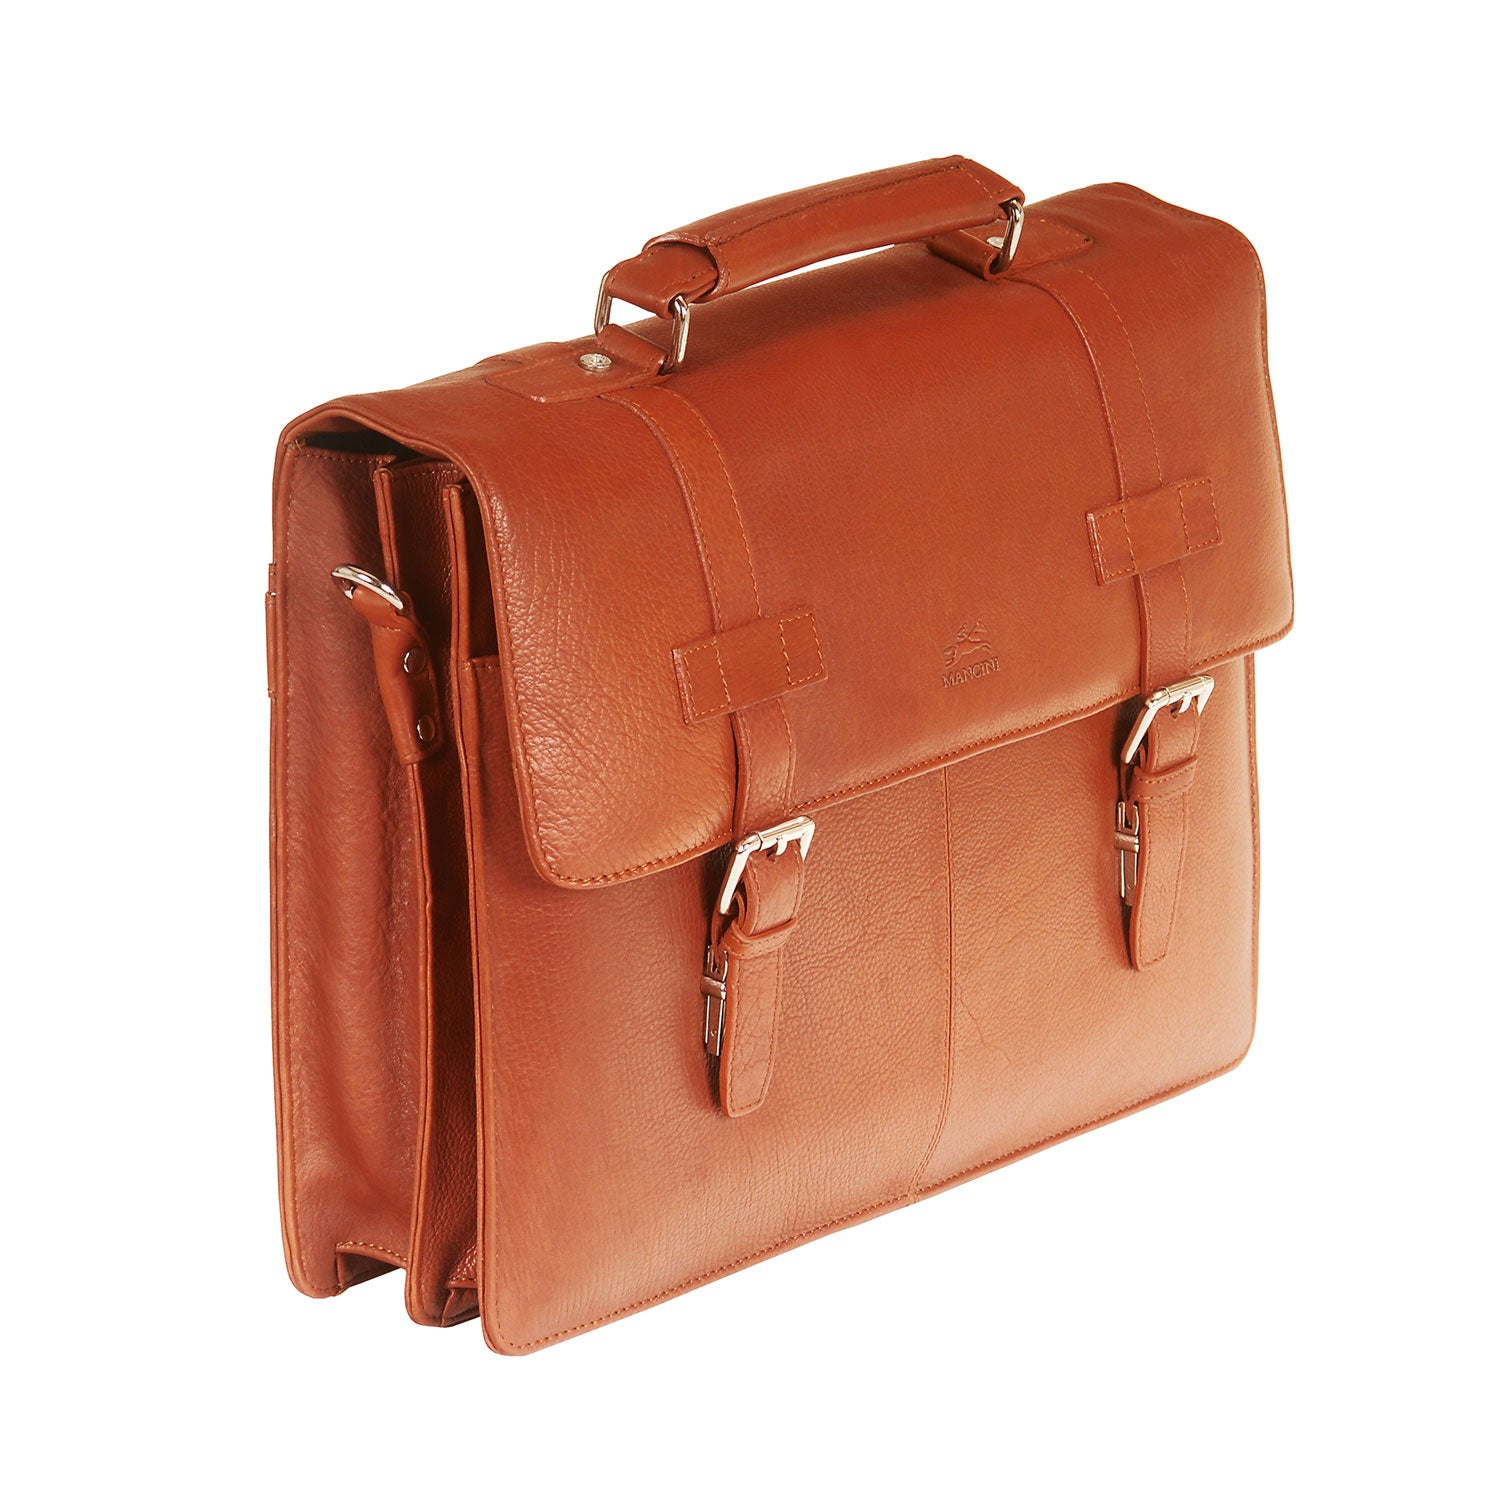 Mancini Leather Double Compartment Flap Briefcase for 15.6" Laptop / Tablet, 16" x 4" x 12", Cognac